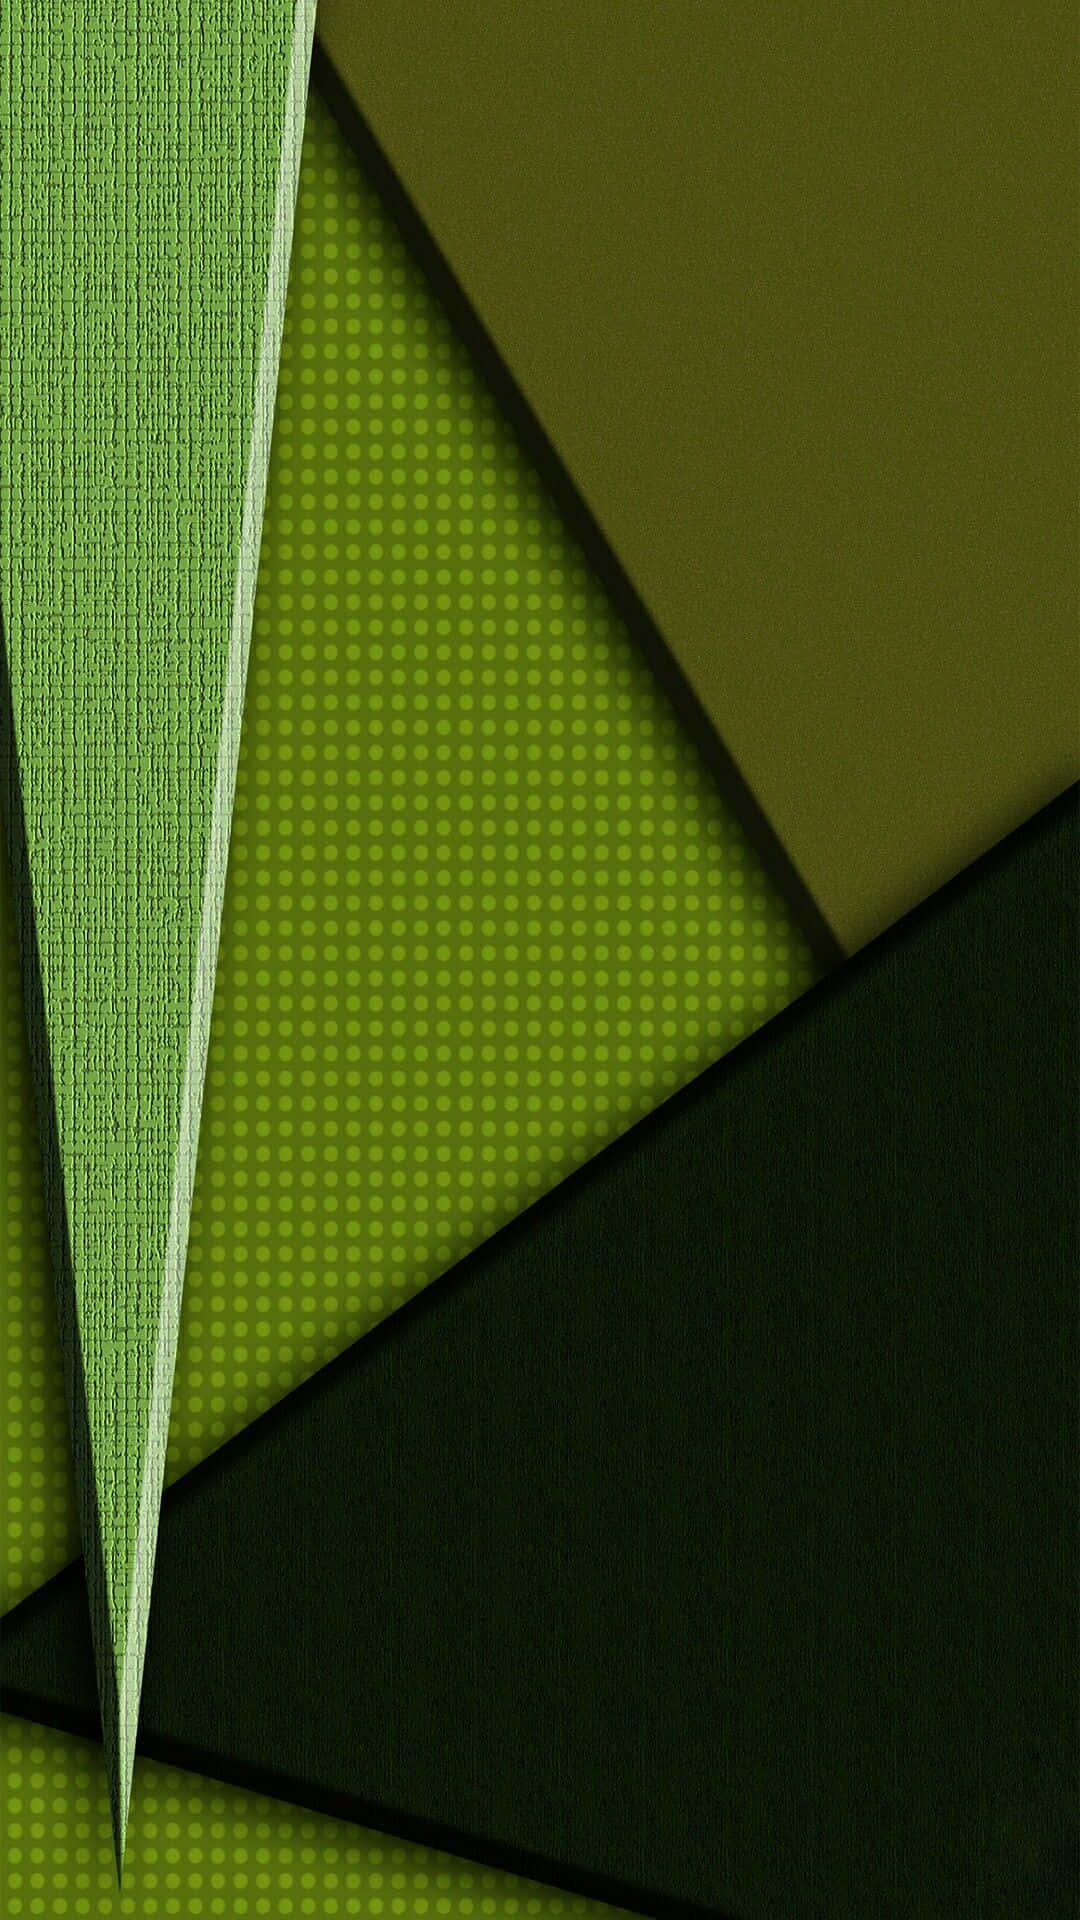 Olivgrön Iphone 1080 X 1920 Wallpaper